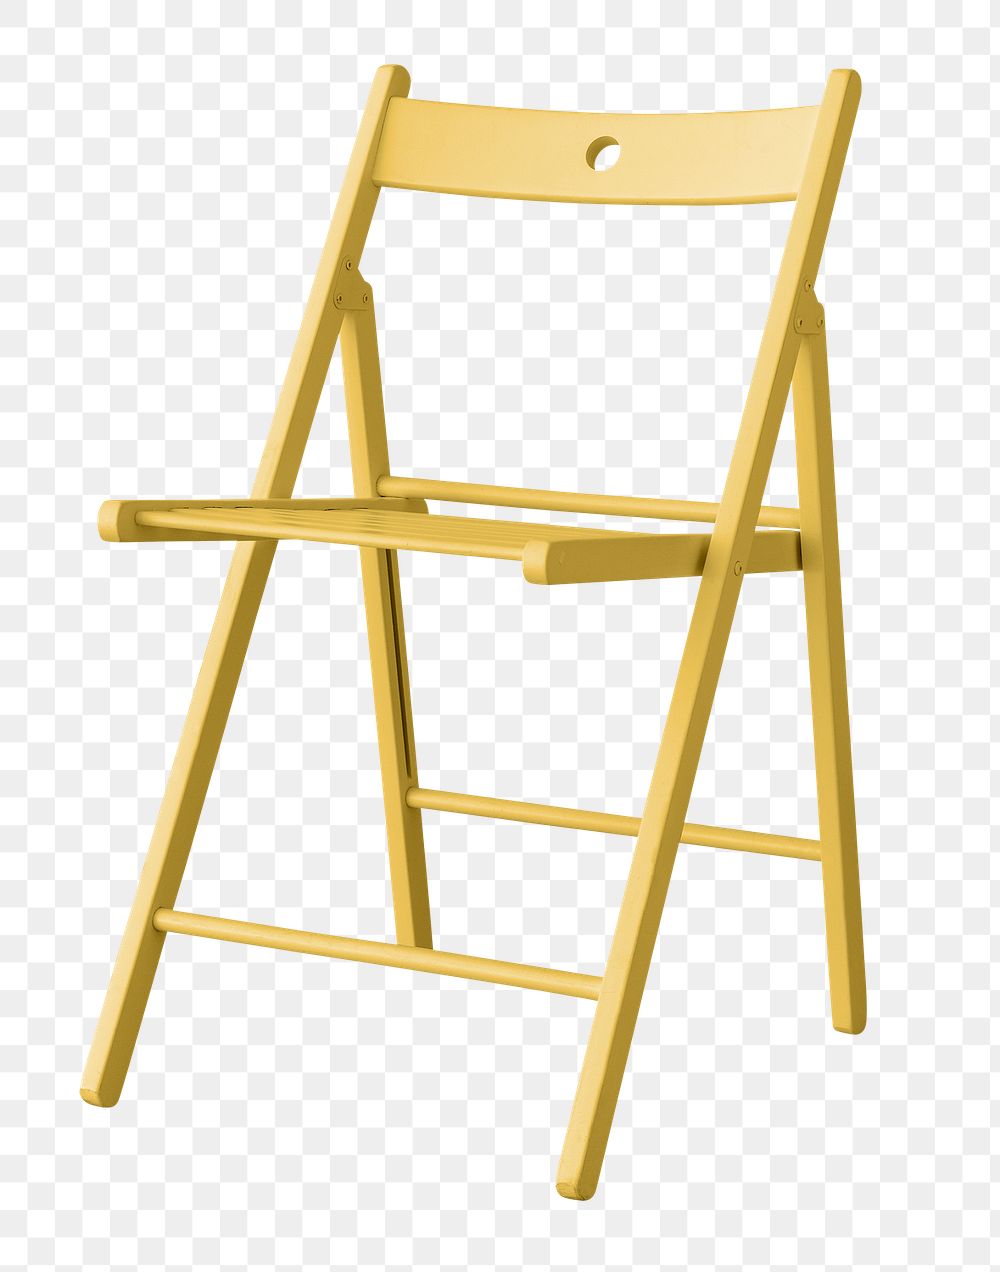 Modern yellow chair design element